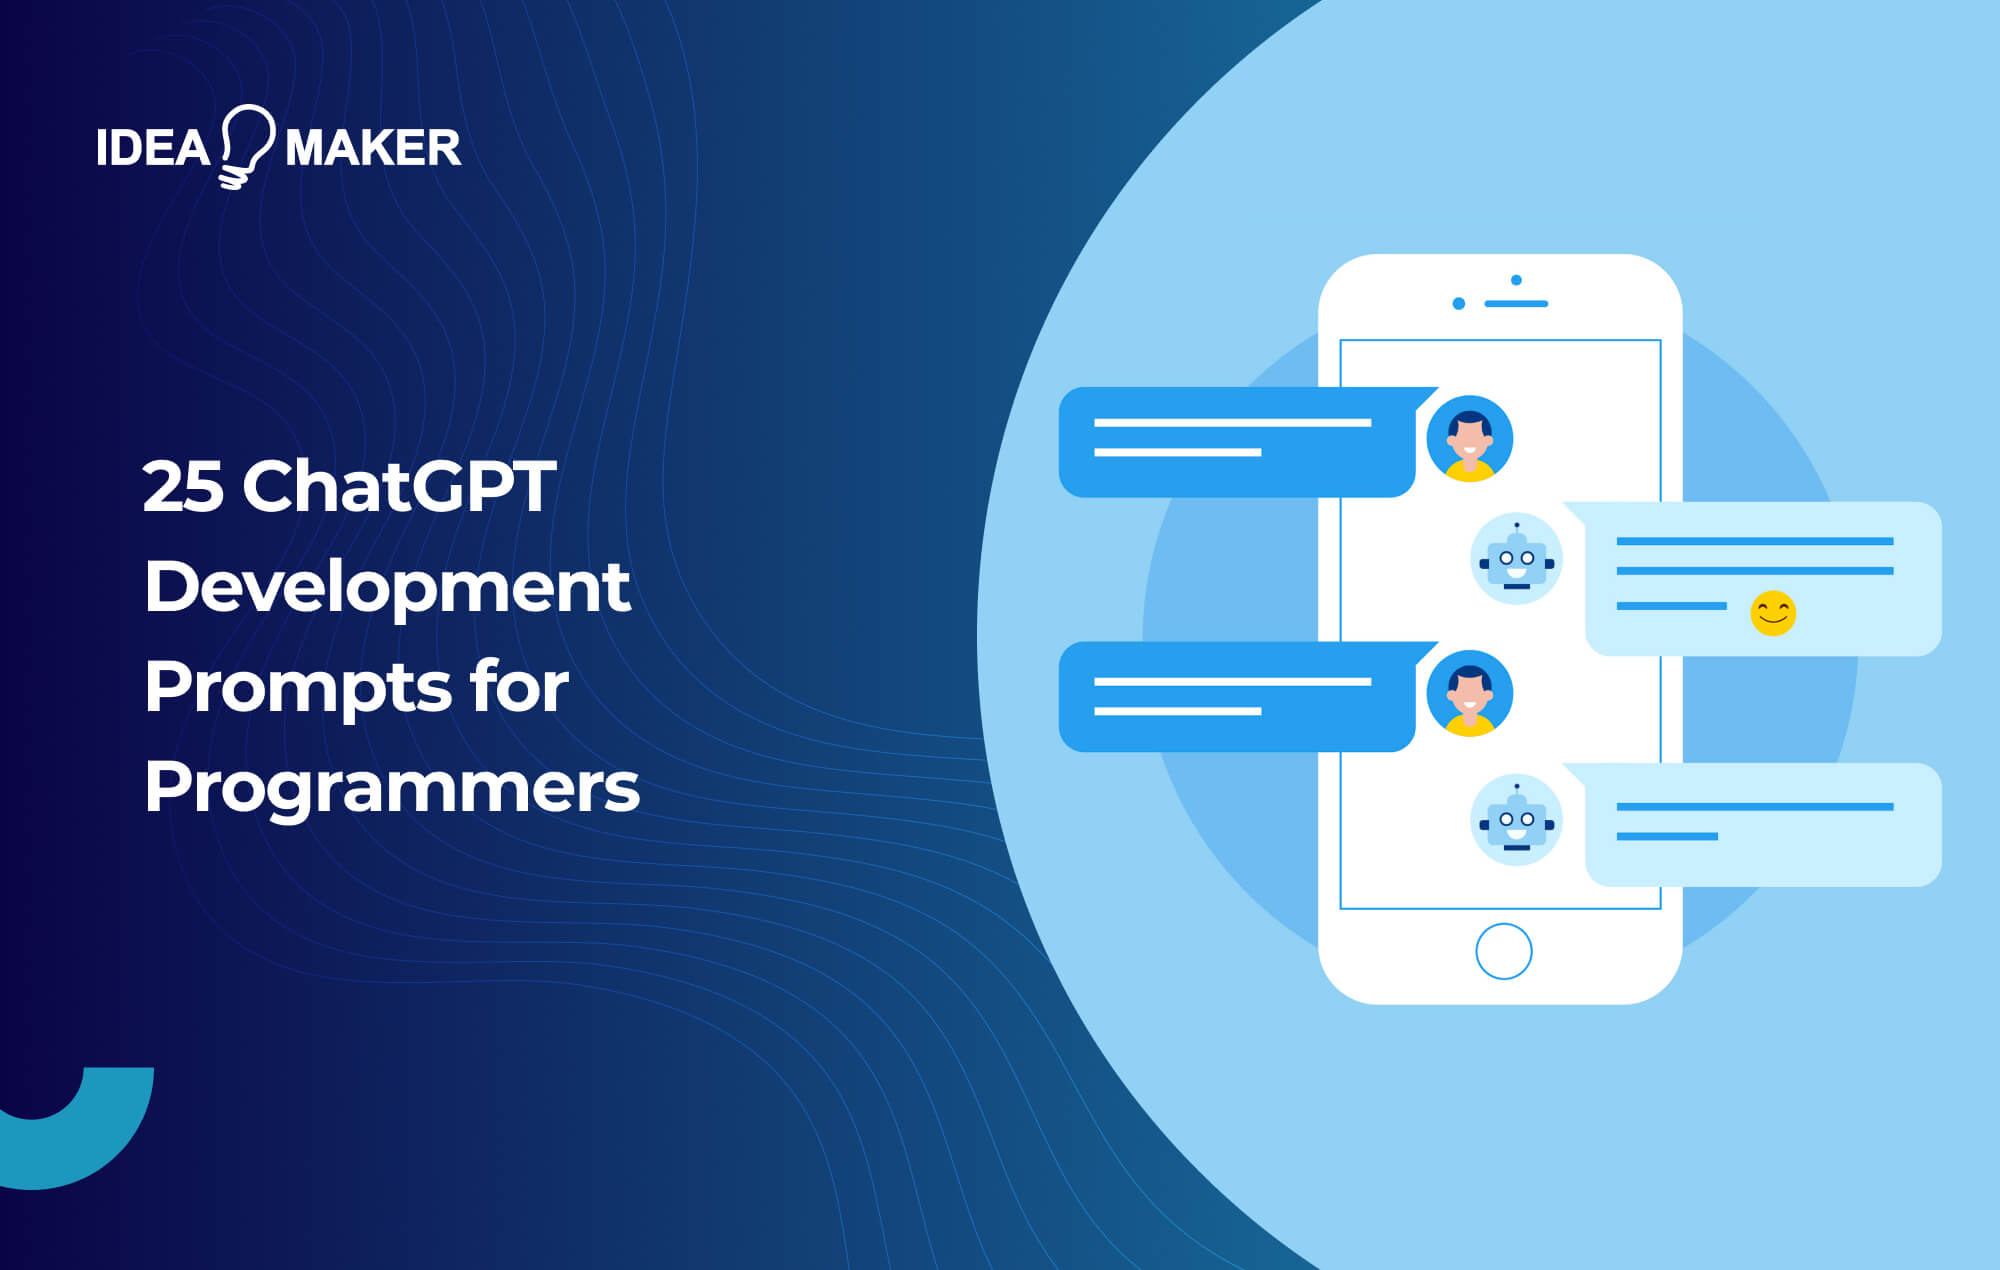 Ideamaker - 25 ChatGPT Development Prompts for Programmers